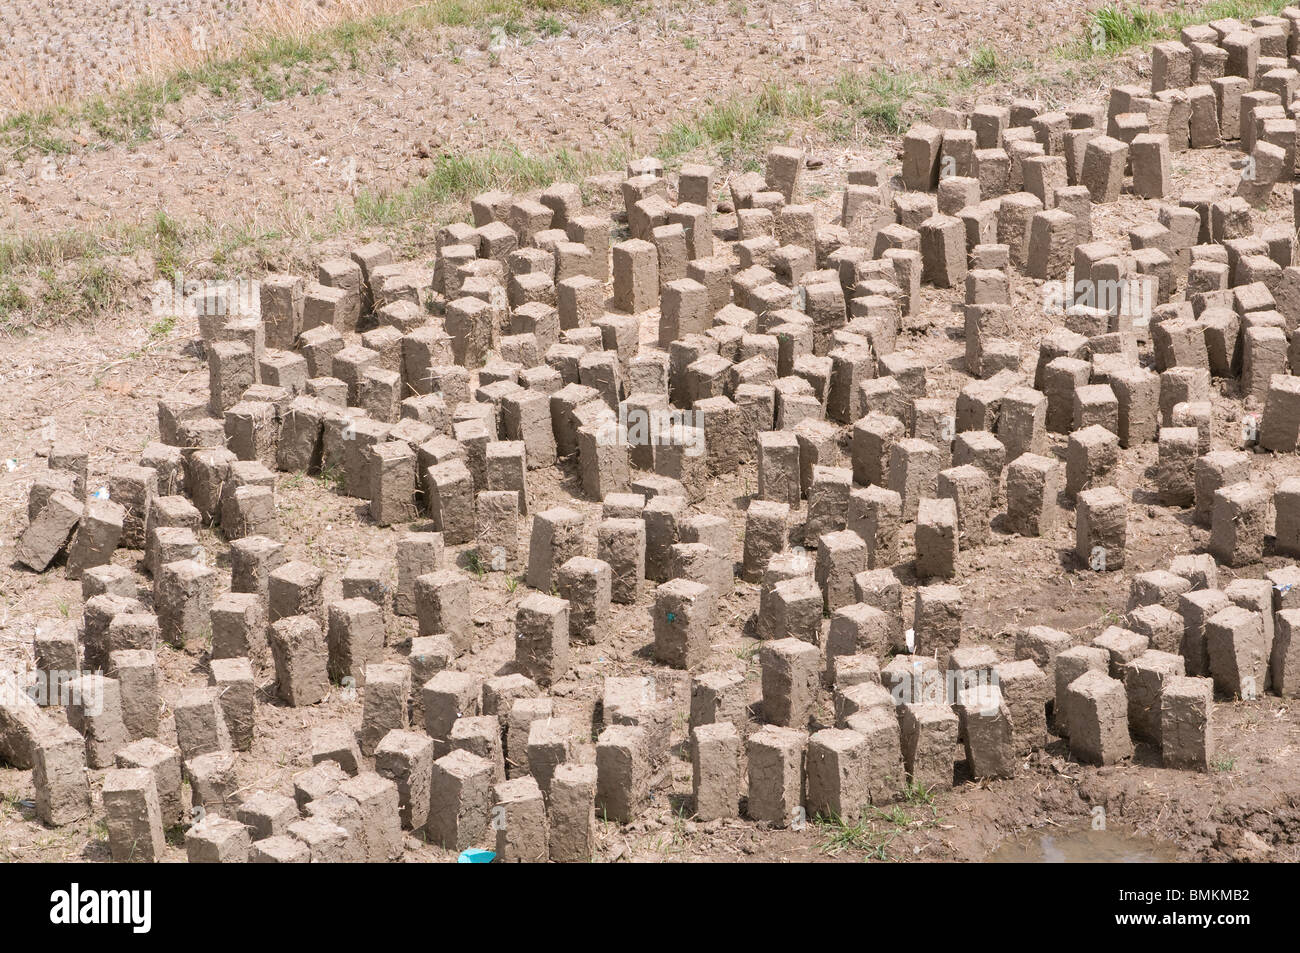 Adobe bricks lying in the sun to dry, Bhutan.Asia Stock Photo